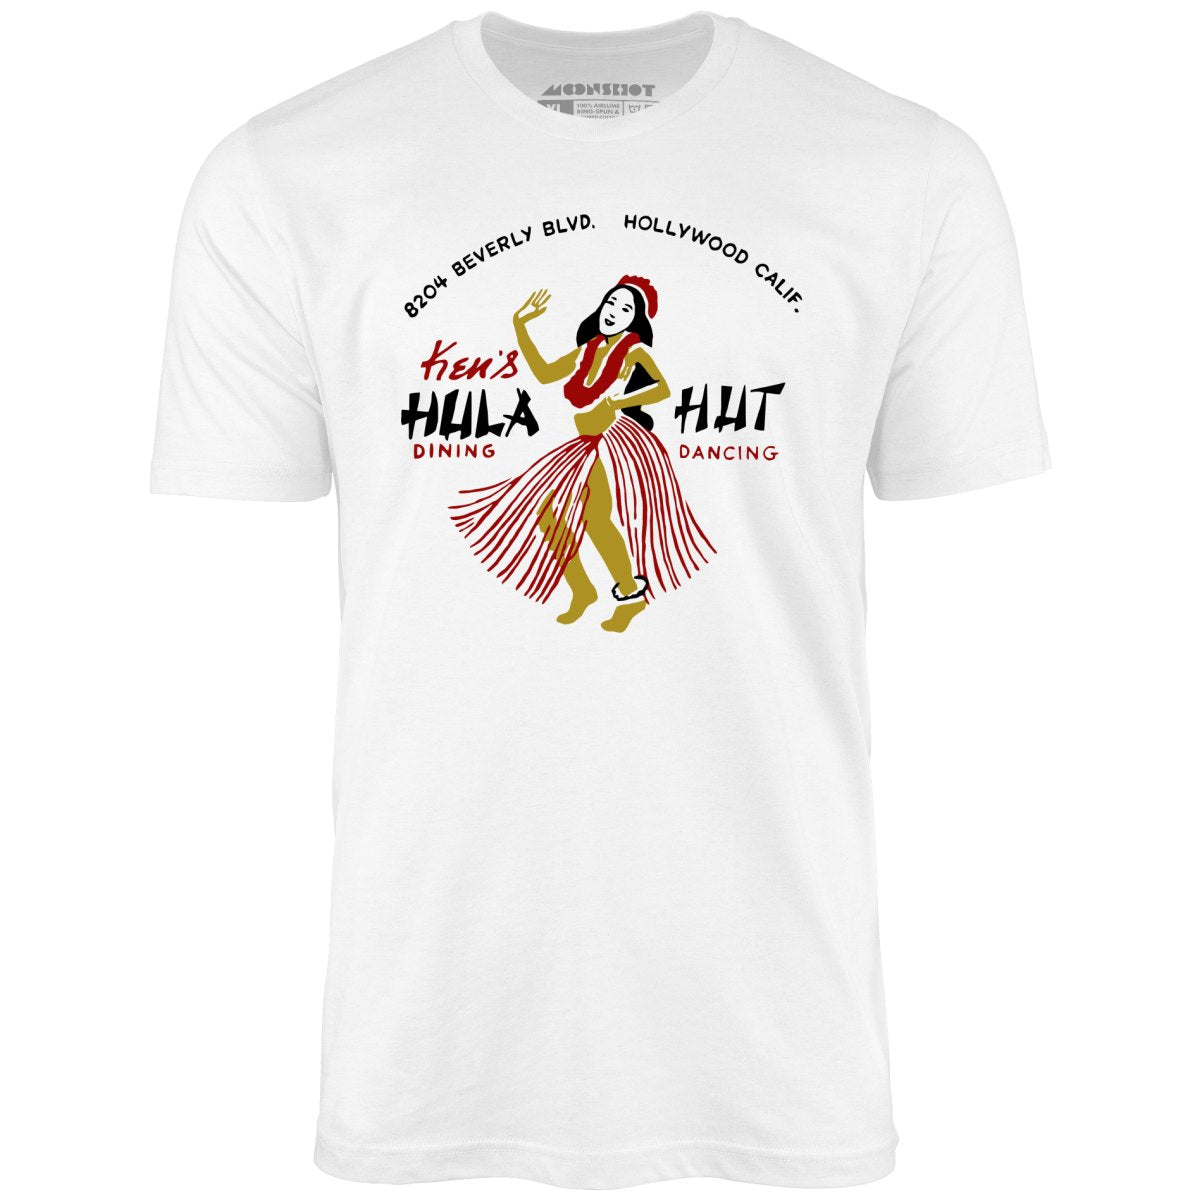 Ken's Hula Hut - Hollywood, CA - Vintage Tiki Bar - Unisex T-Shirt